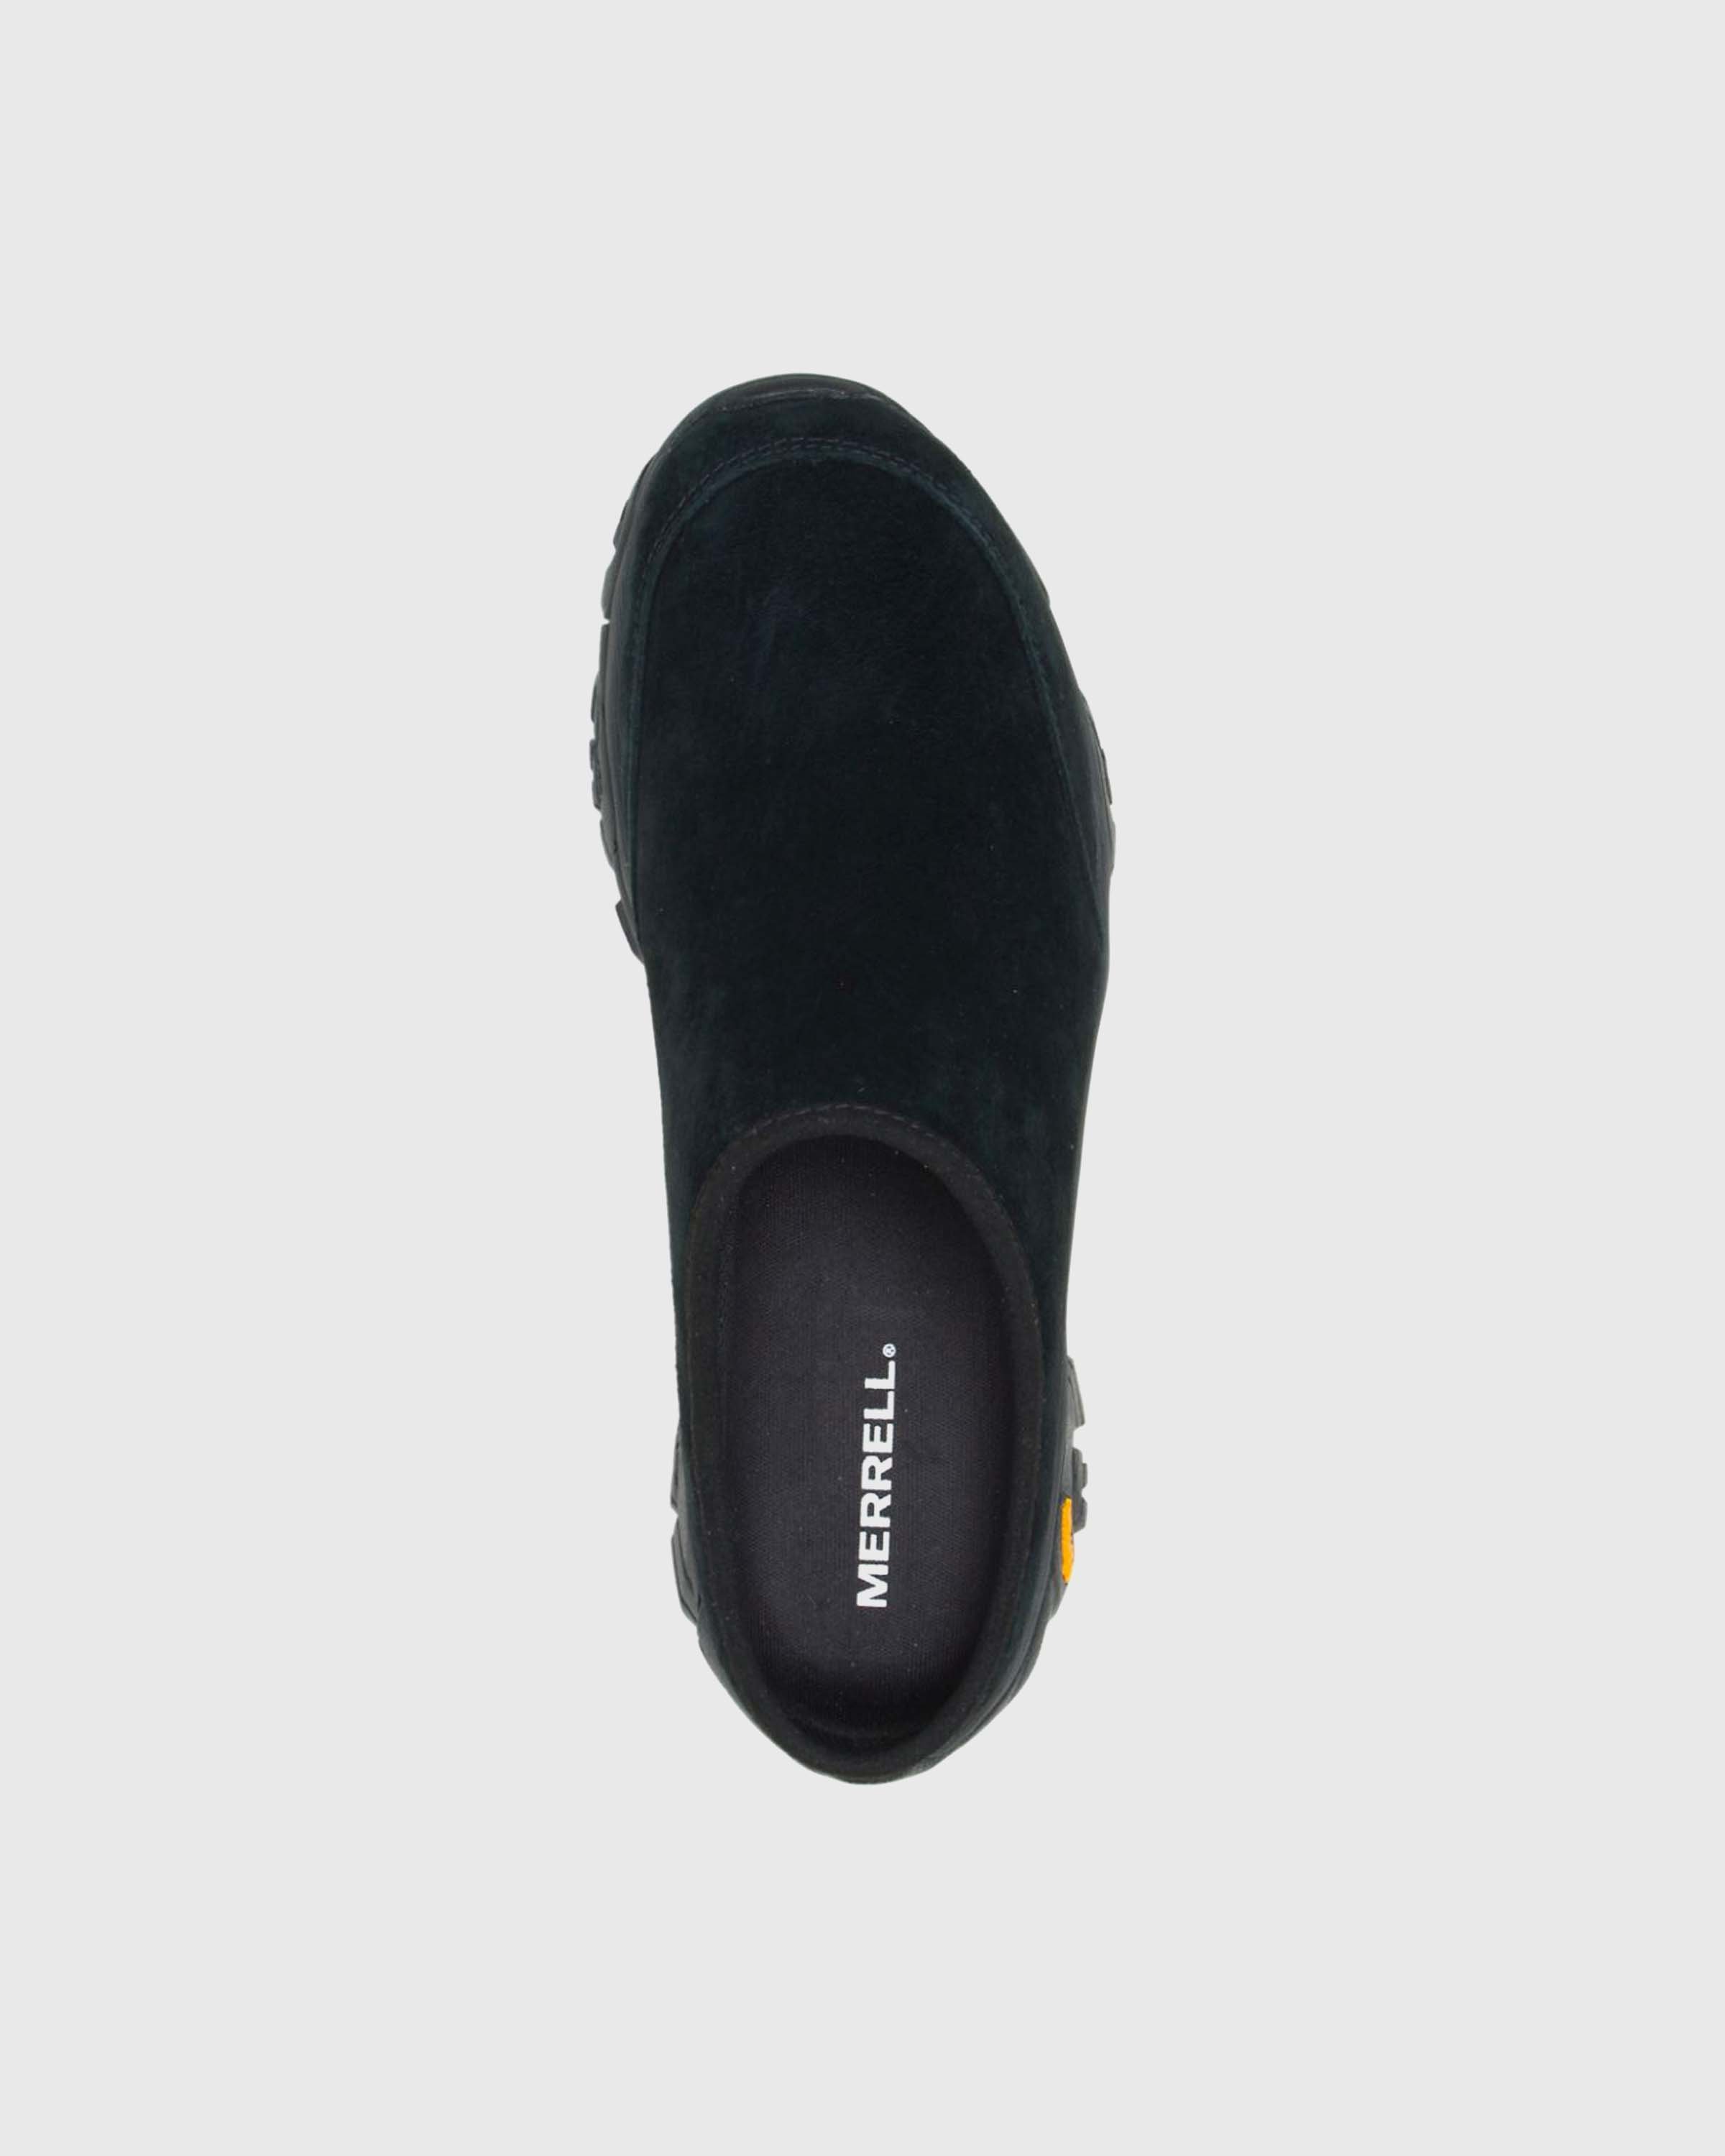 Merrell - Moab Retro Slide 1TRL Black - Footwear - Black - Image 5